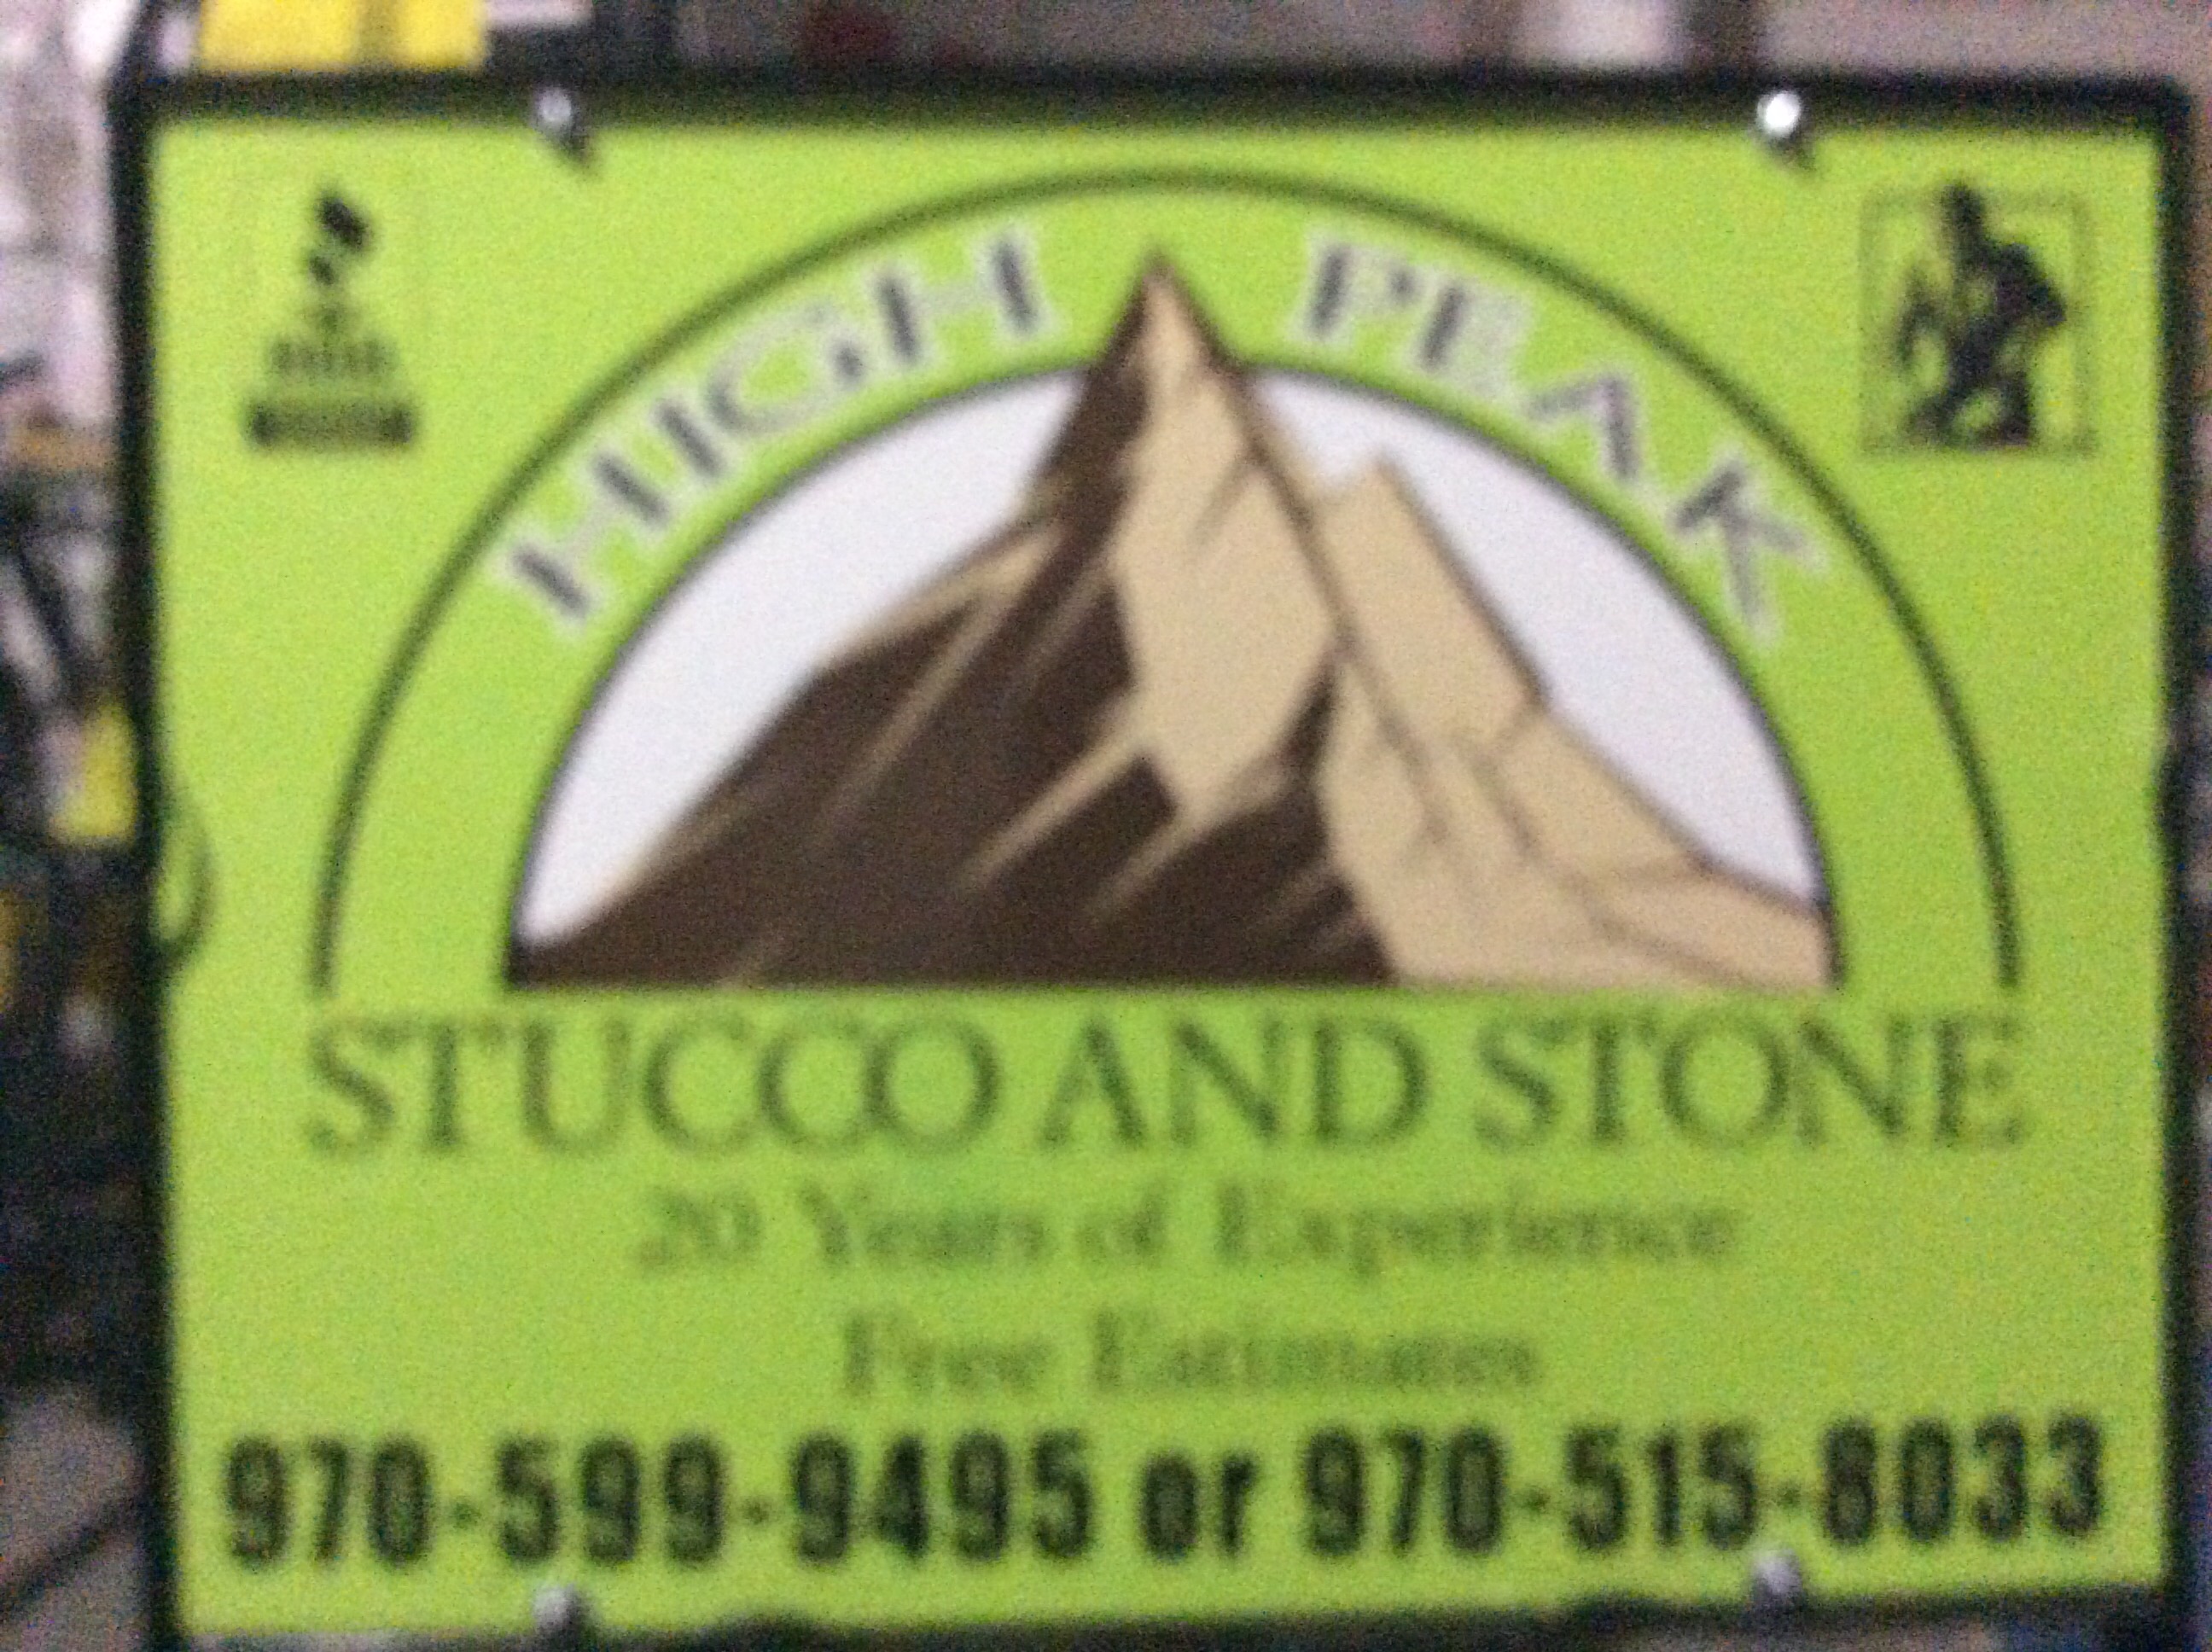 High Peak Stucco & Stone, LLC Logo